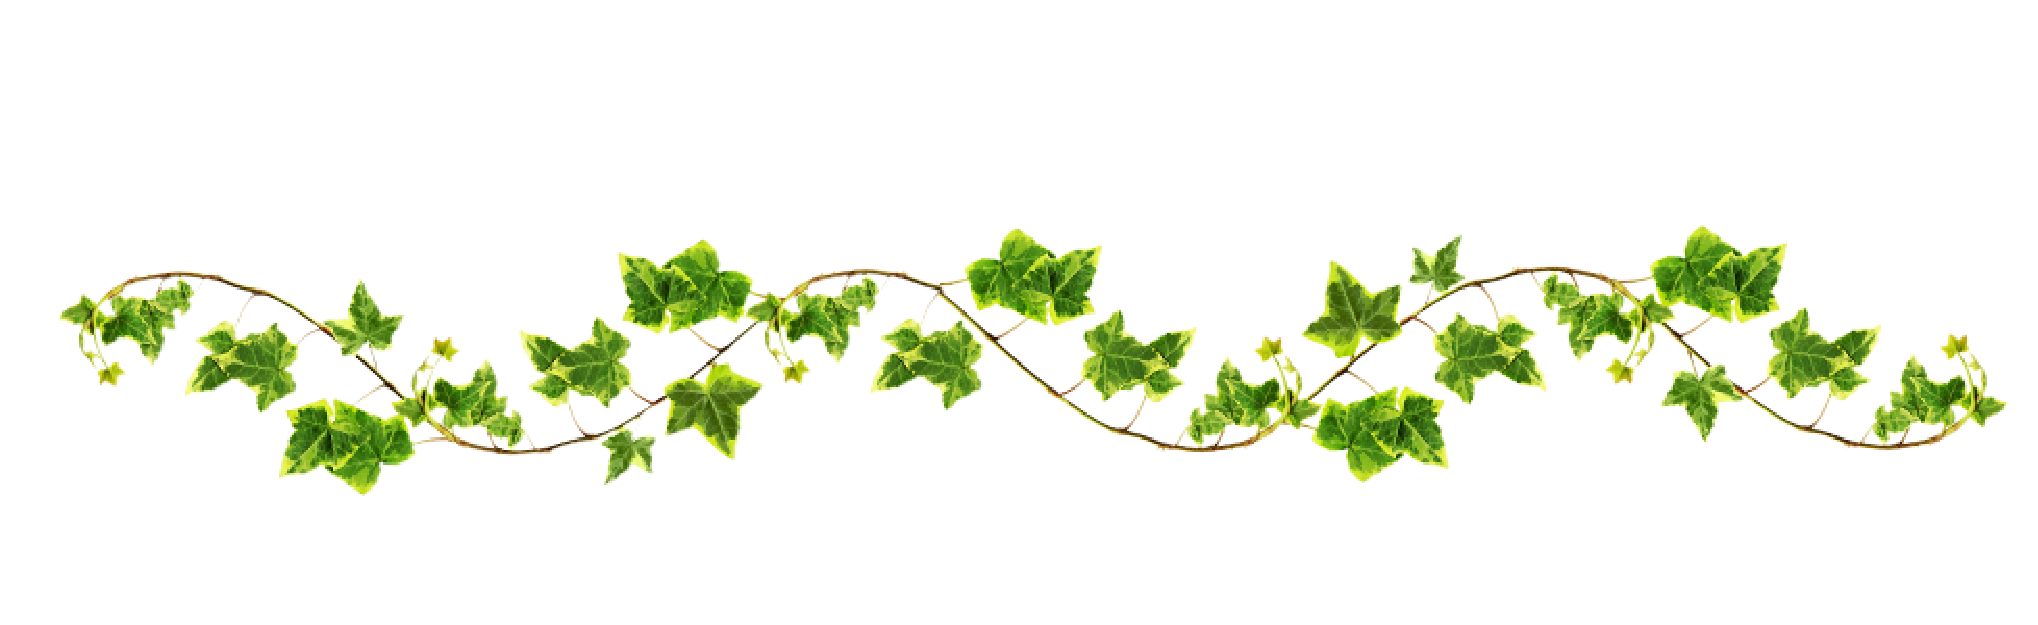 vines-png-vines-transparent-background-freeiconspng